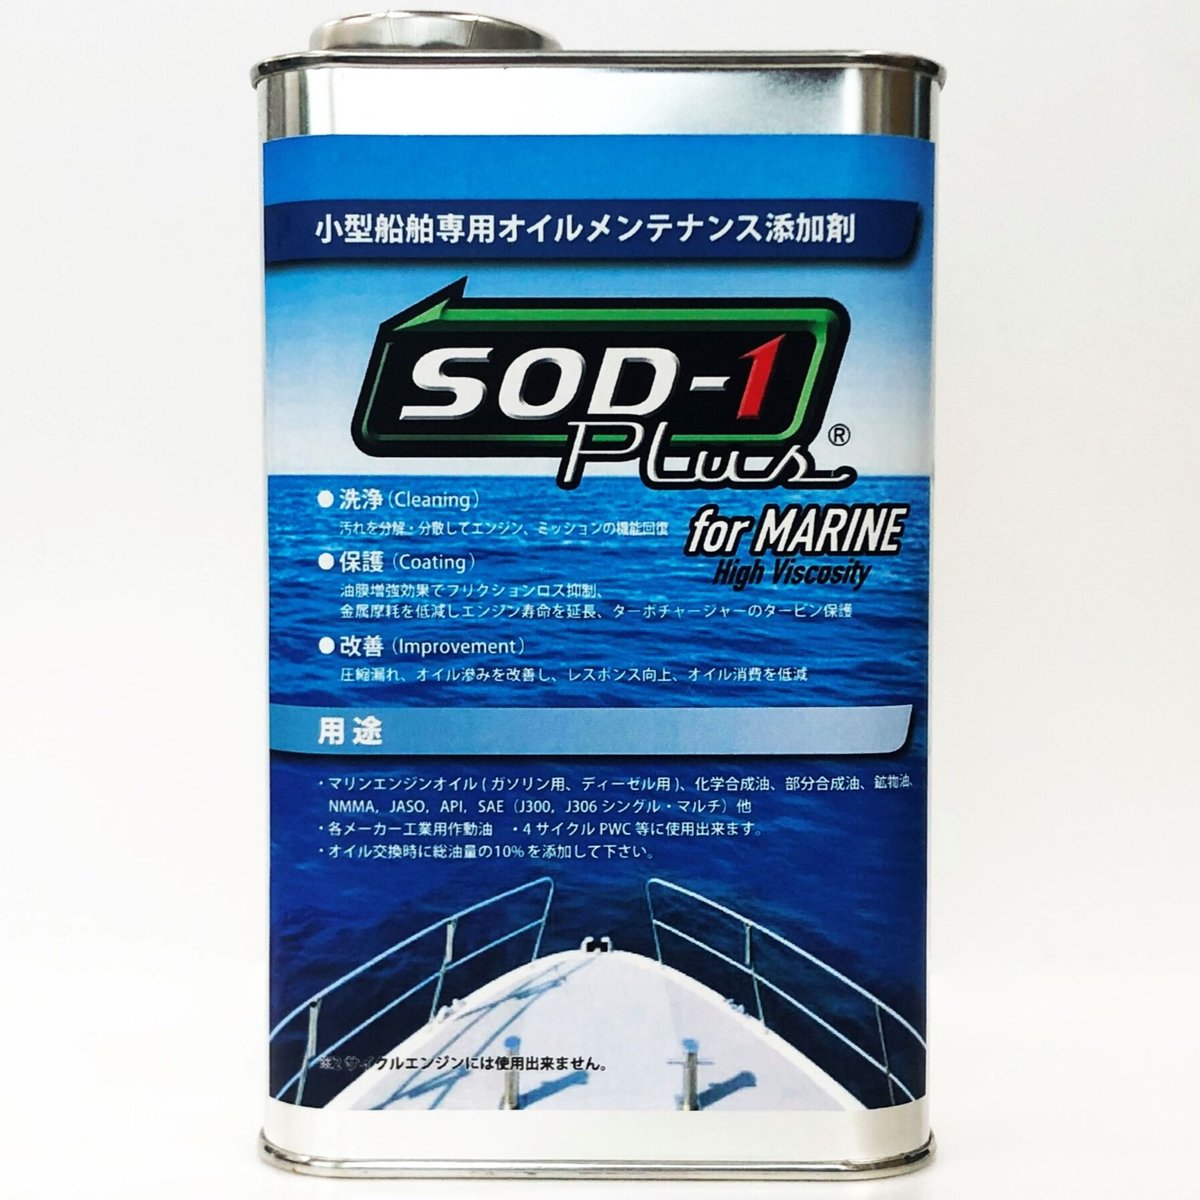 1L缶】D-1ケミカル SOD-1 PLUS for マリン TSURIMONOSTORE